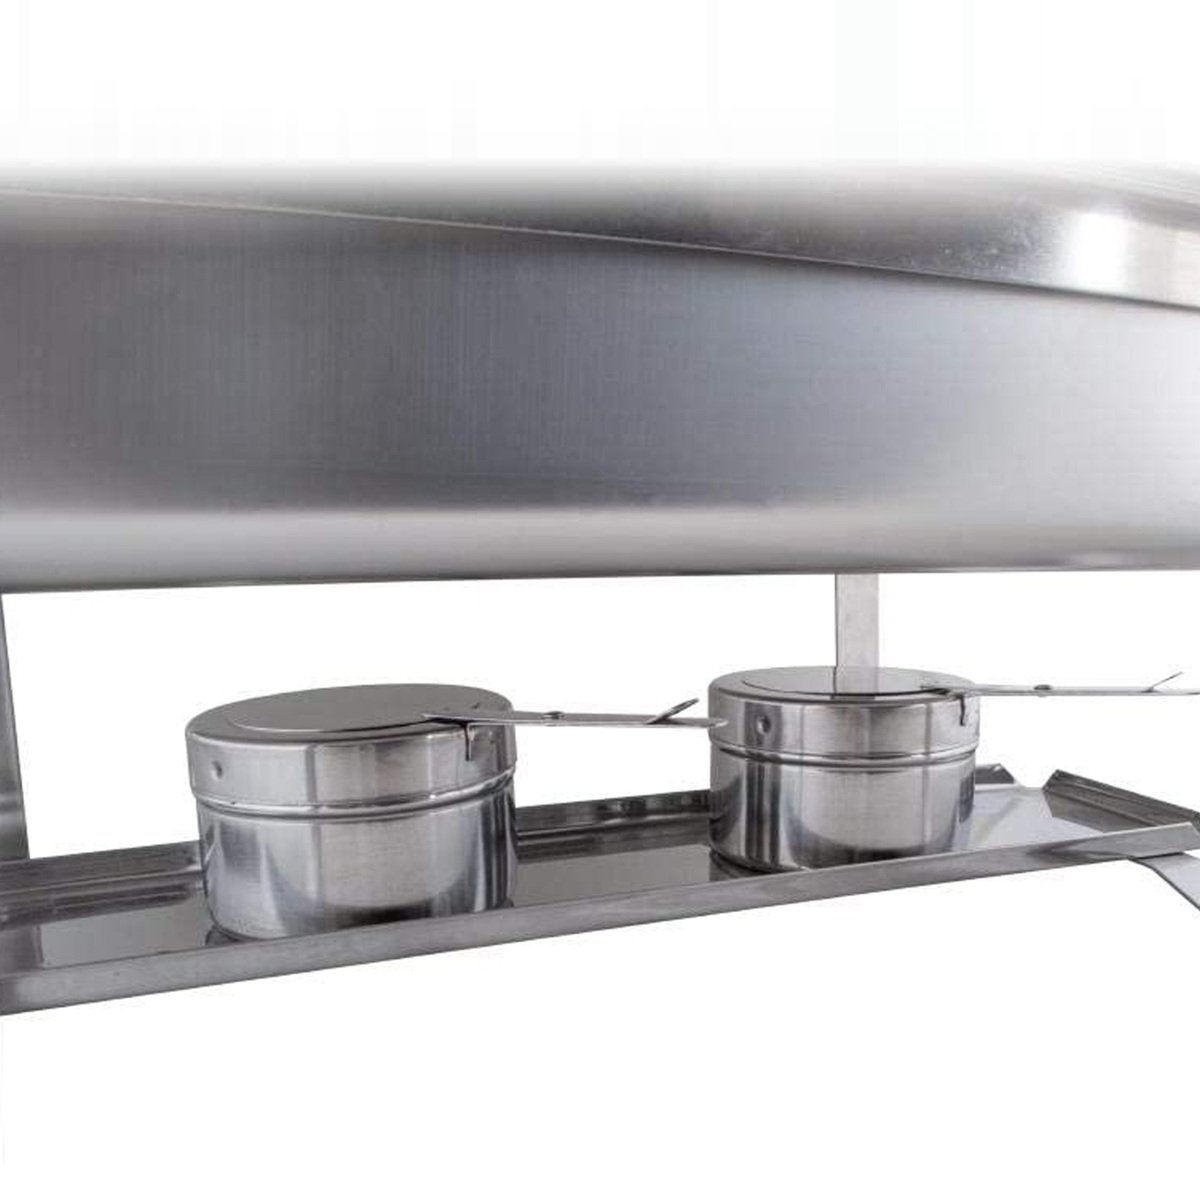 Basurrah Stainless Steel Chafing Dish 16-130